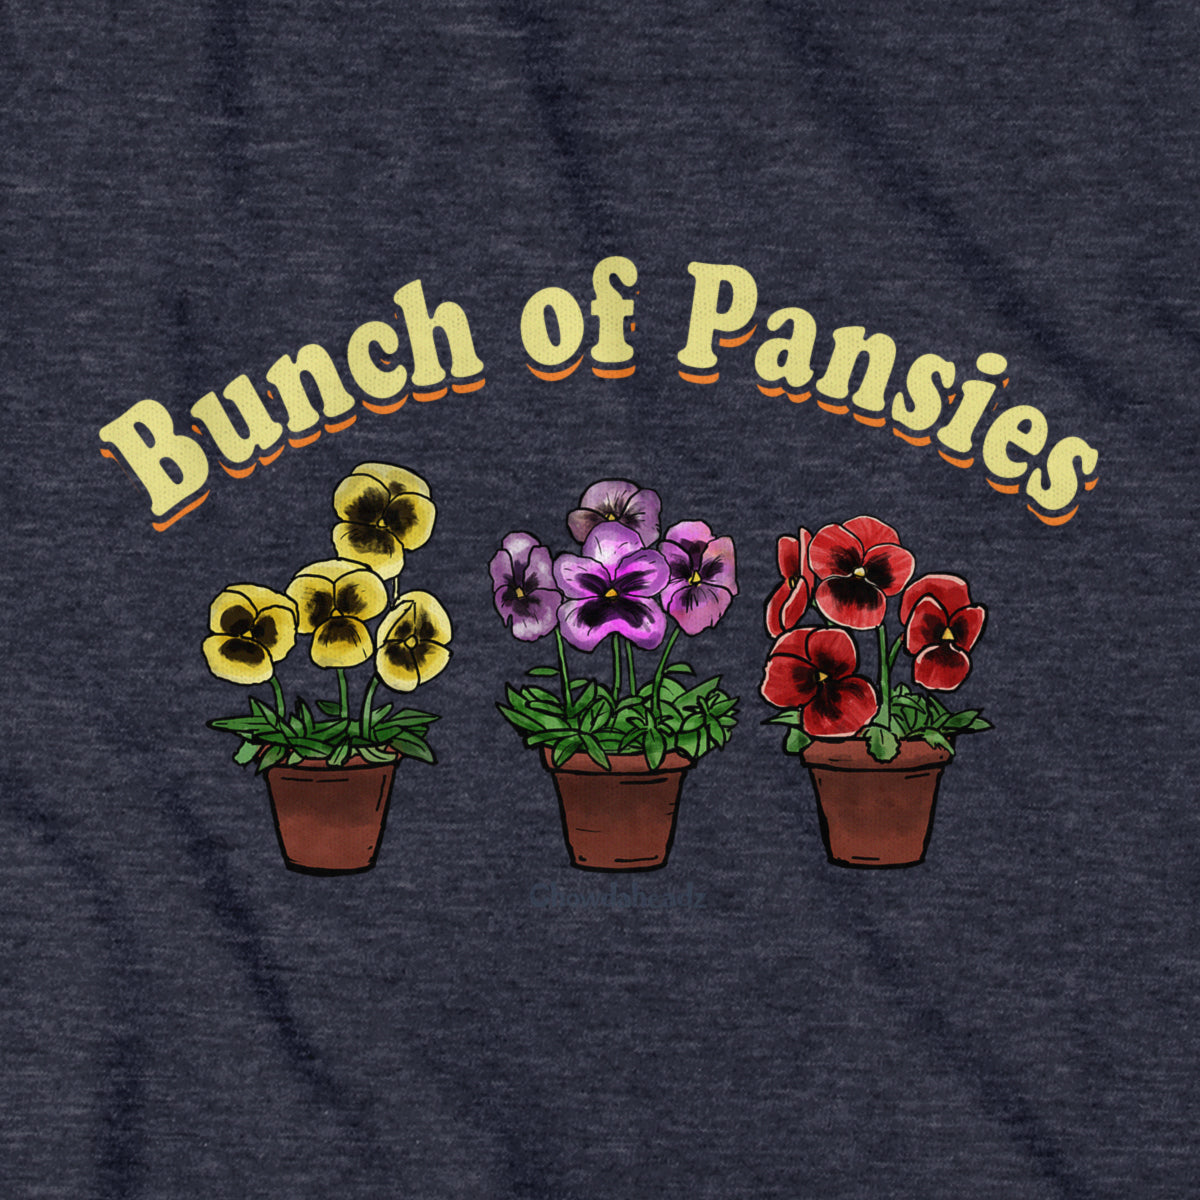 Bunch Of Pansies T-Shirt - Chowdaheadz